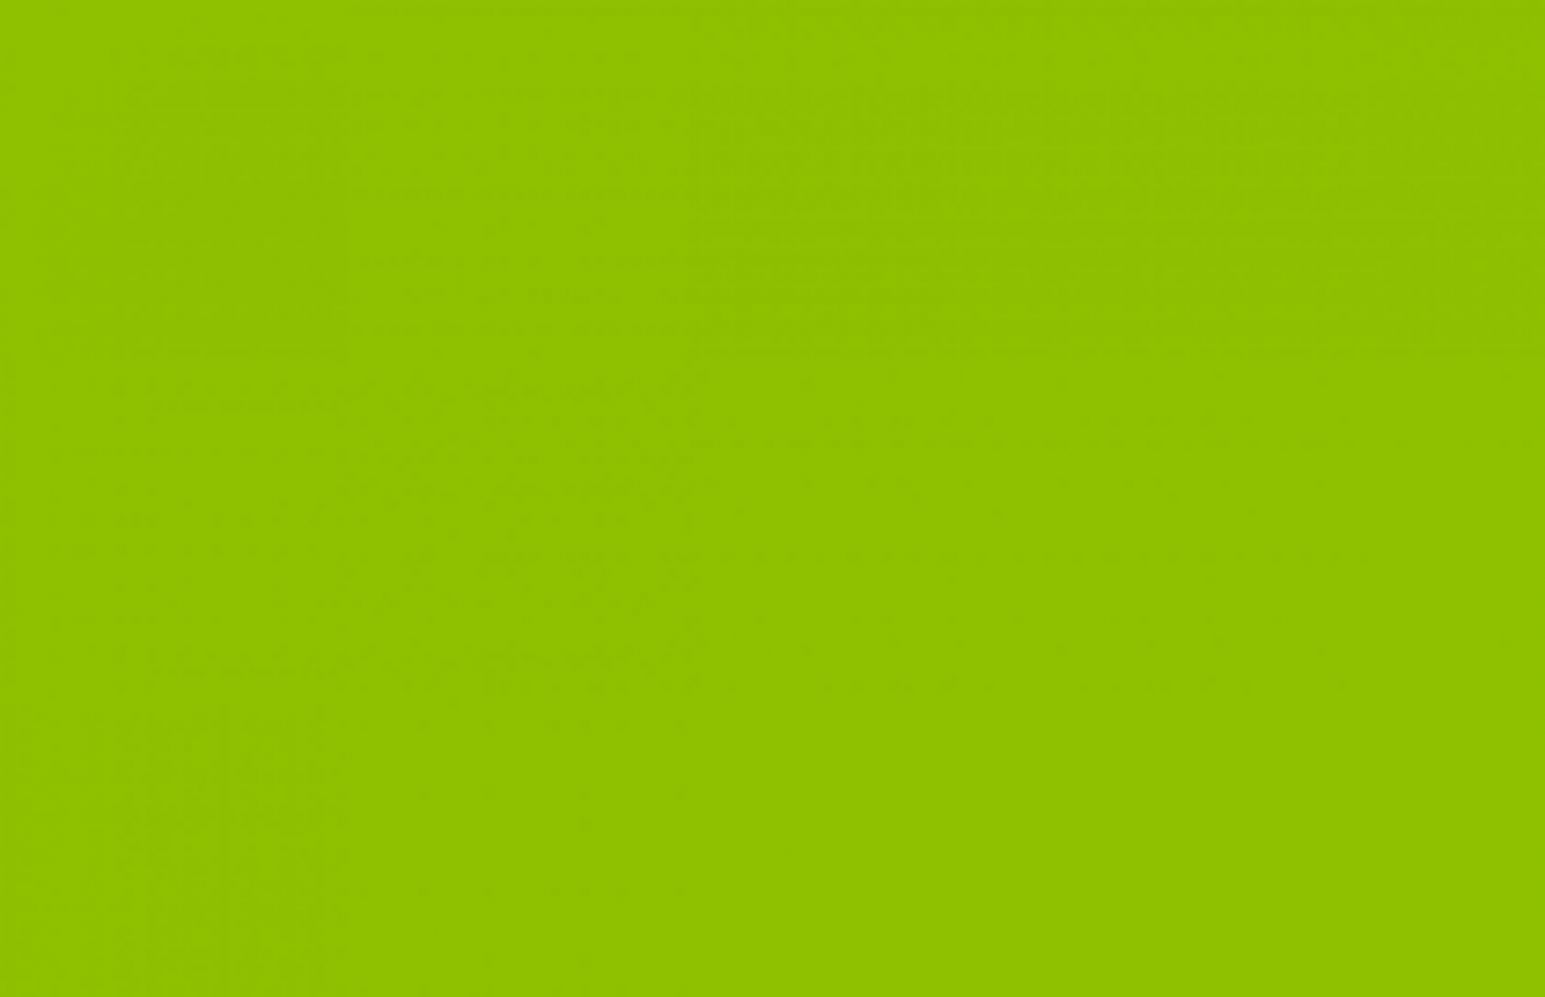 Plain Apple Green Colour Wallpaper For Desktops And - Colorfulness -  1545x997 Wallpaper 